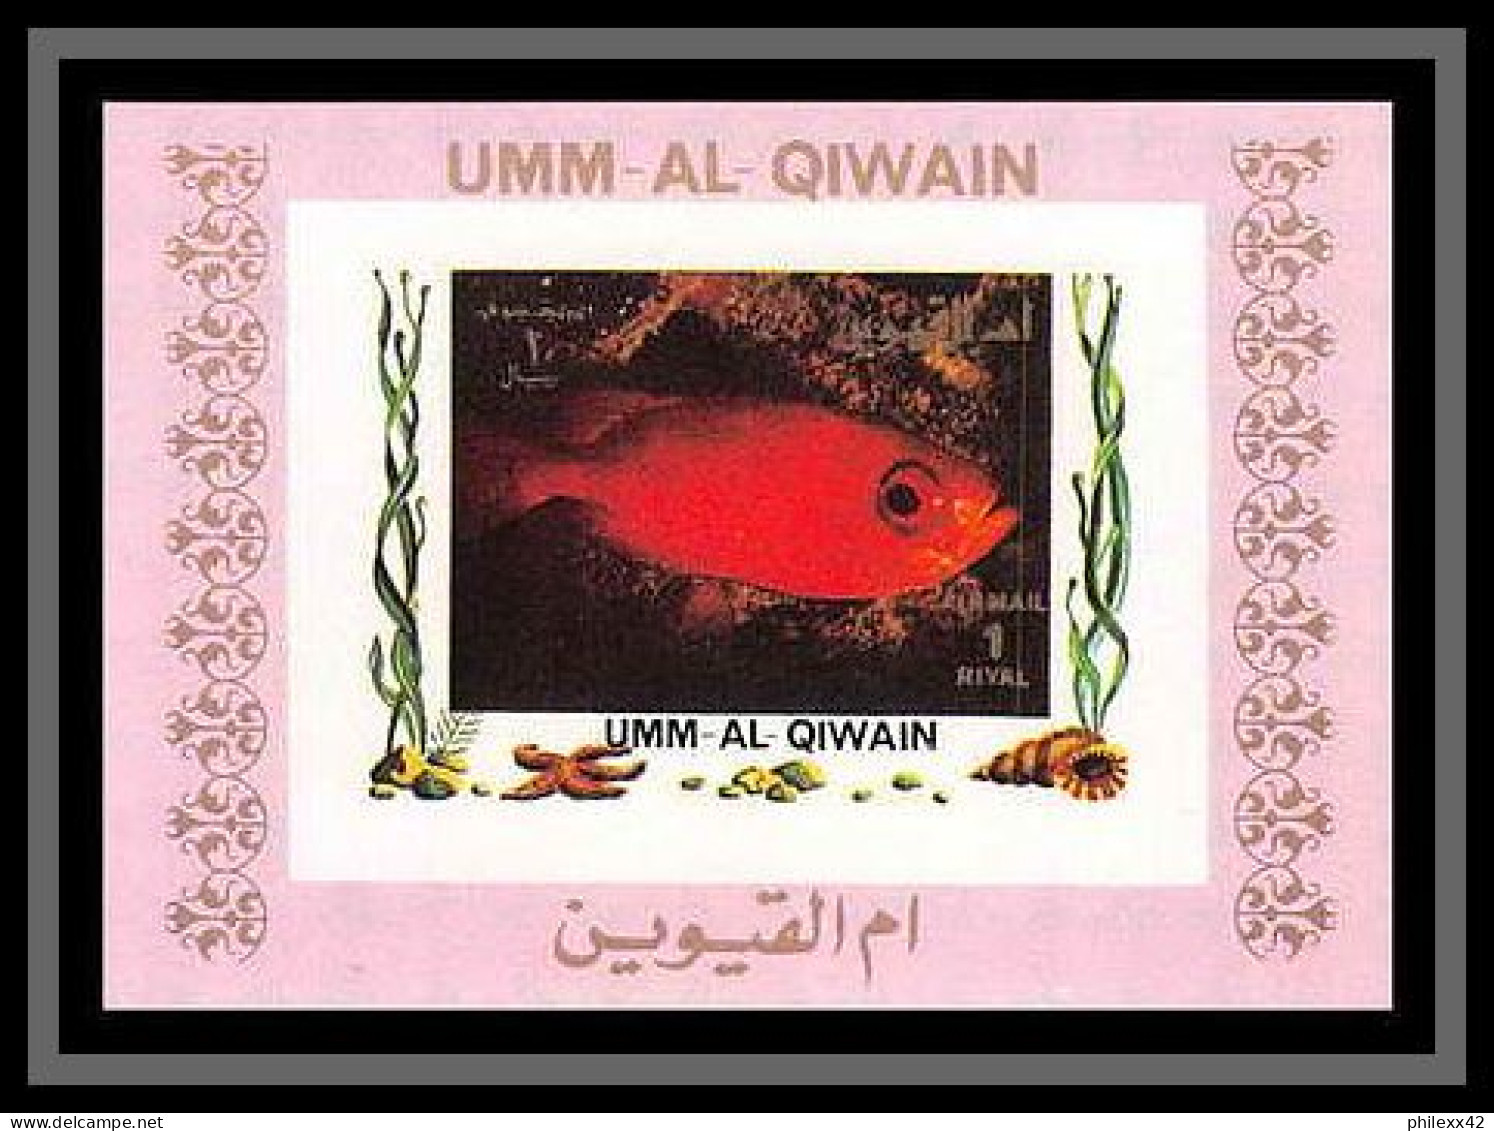 0030/ Umm al Qiwain deluxe blocs ** MNH michel N° 1466 / 1481 tropical - poissons (Fish) rose non dentelé imperf